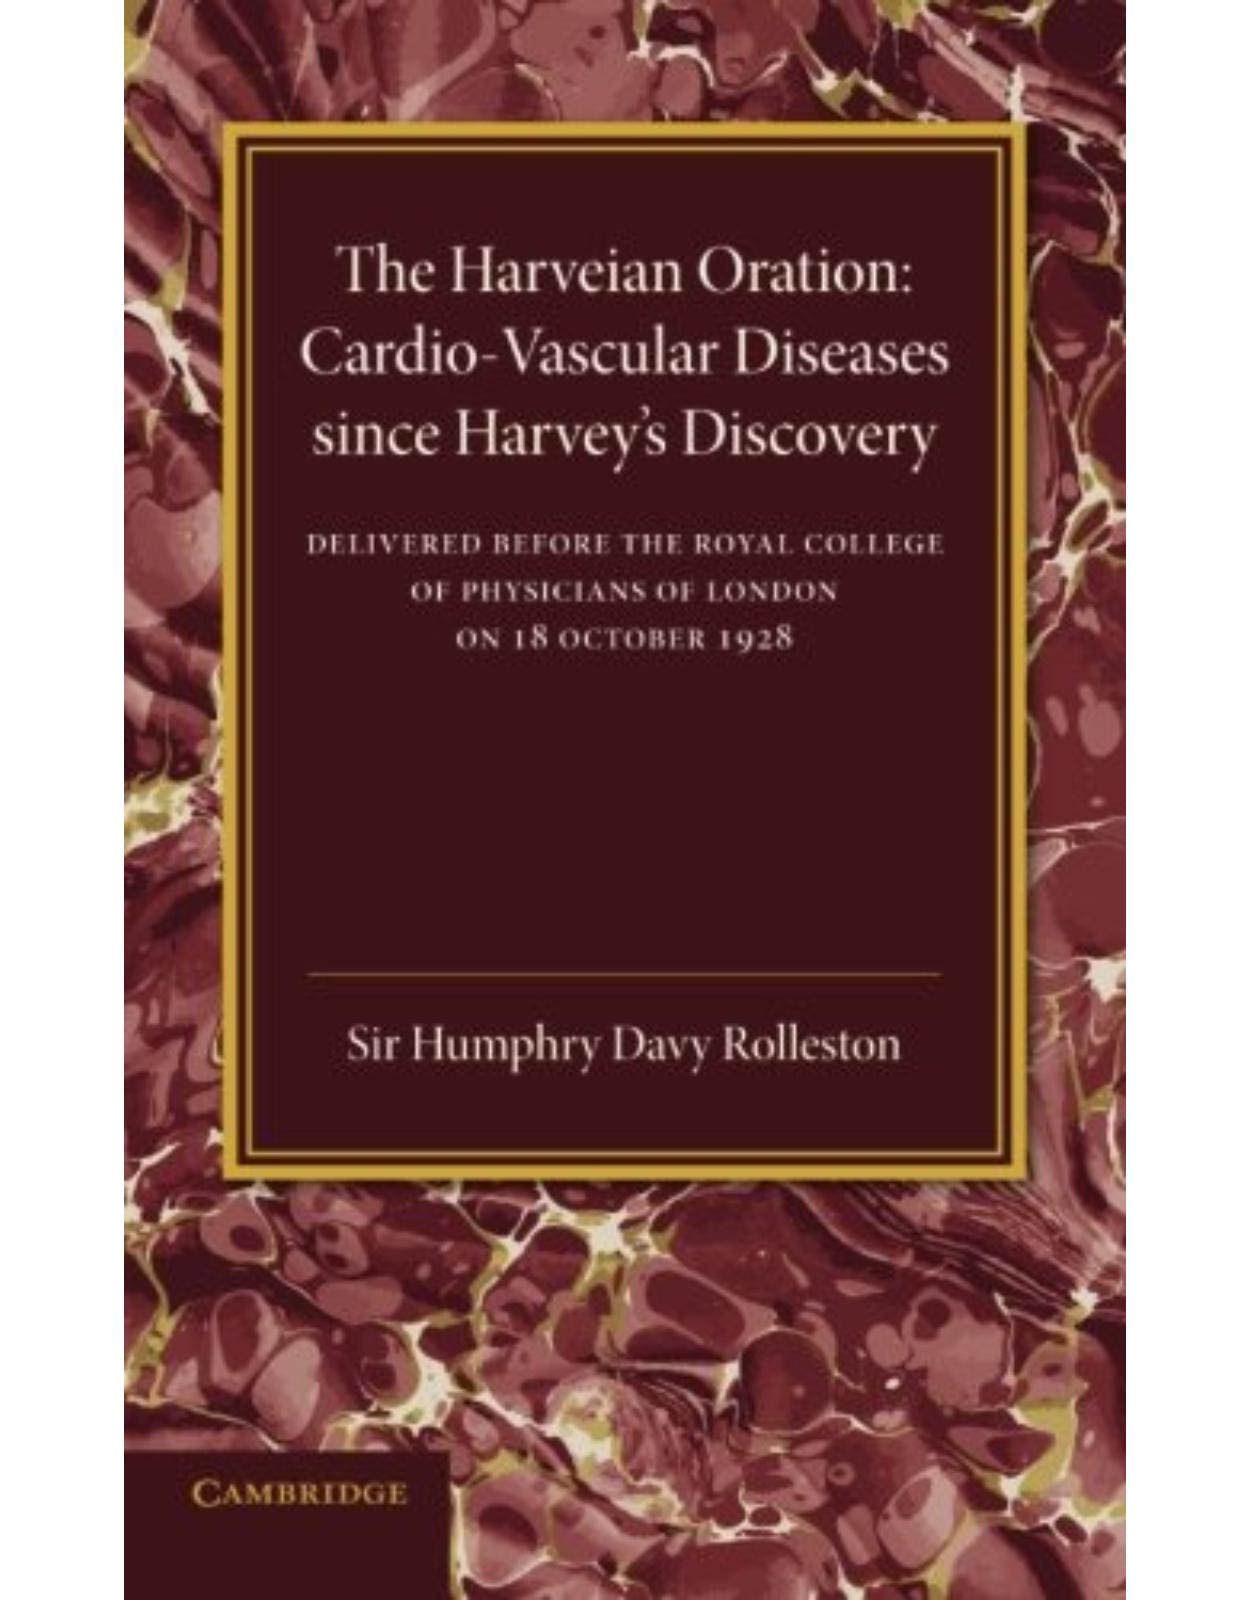 Cardio-Vascular Diseases since Harvey's Discovery: The Harveian Oration, 1928